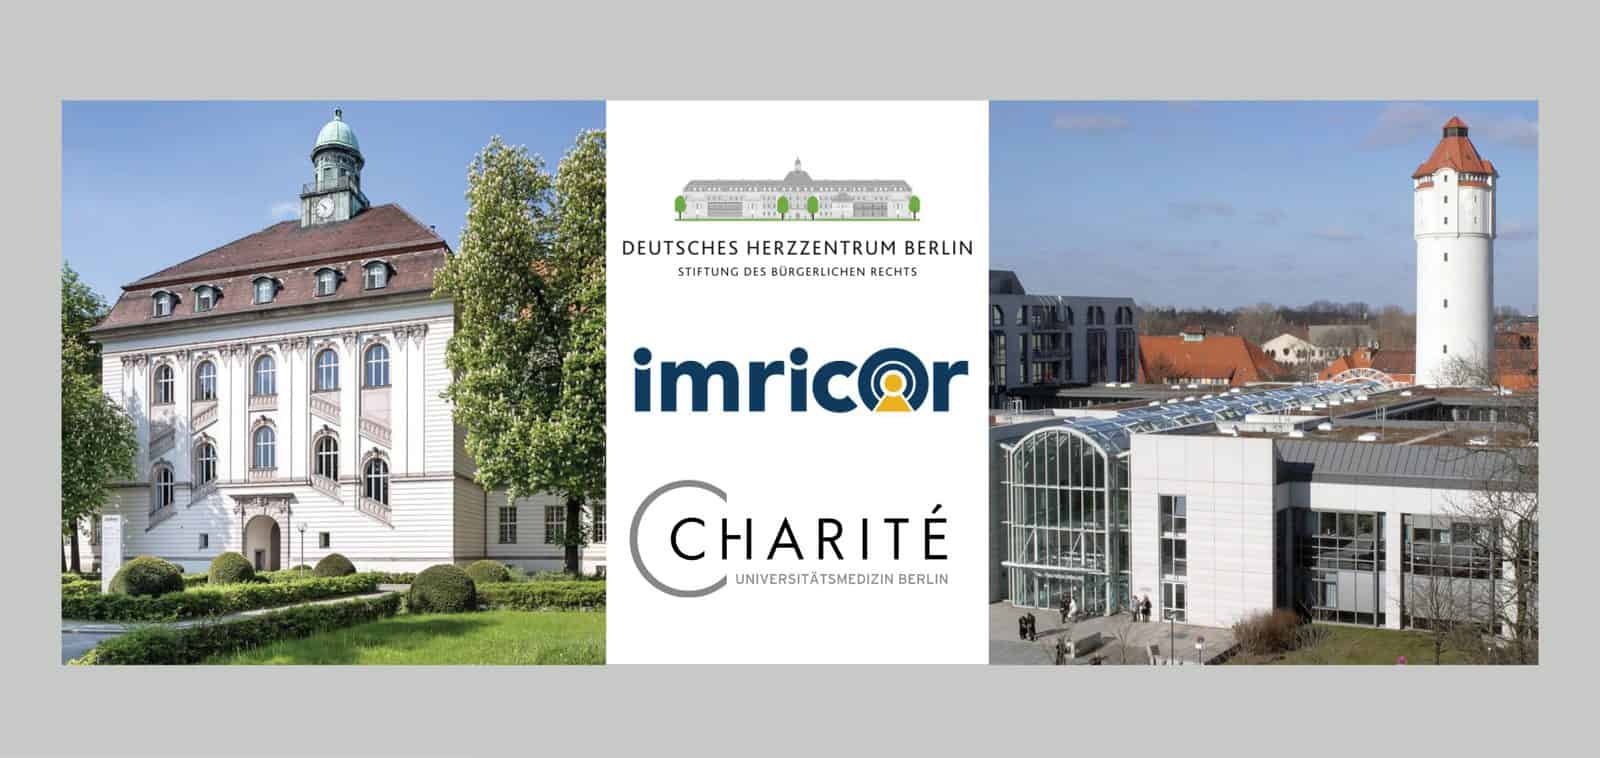 Imricor Enrolls Two More Customer Sites in Berlin